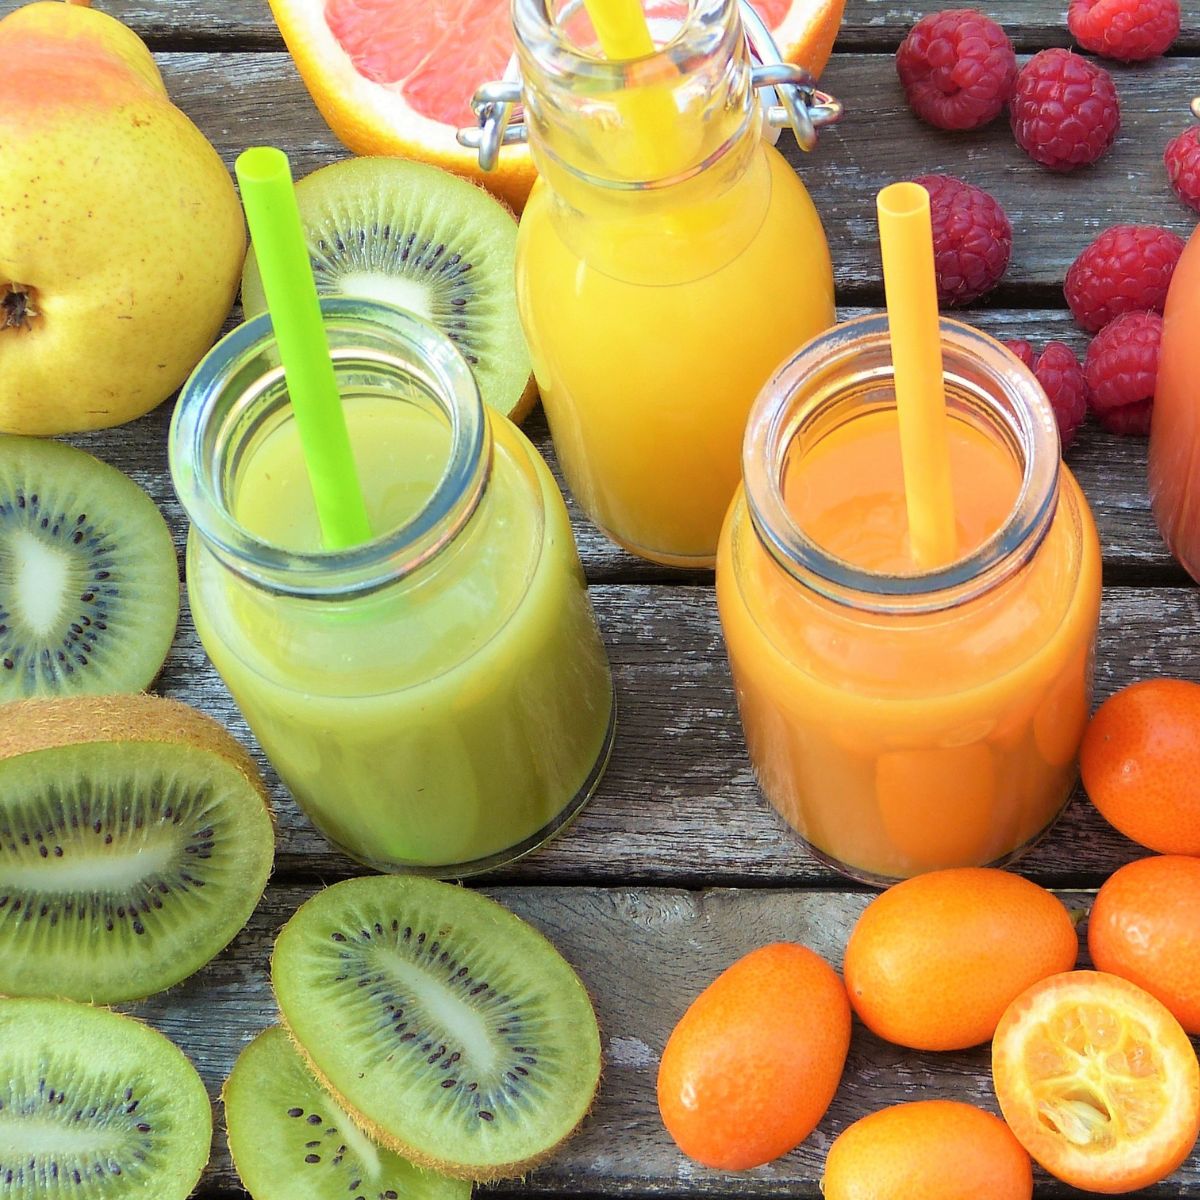 Is Fruit Healthy?